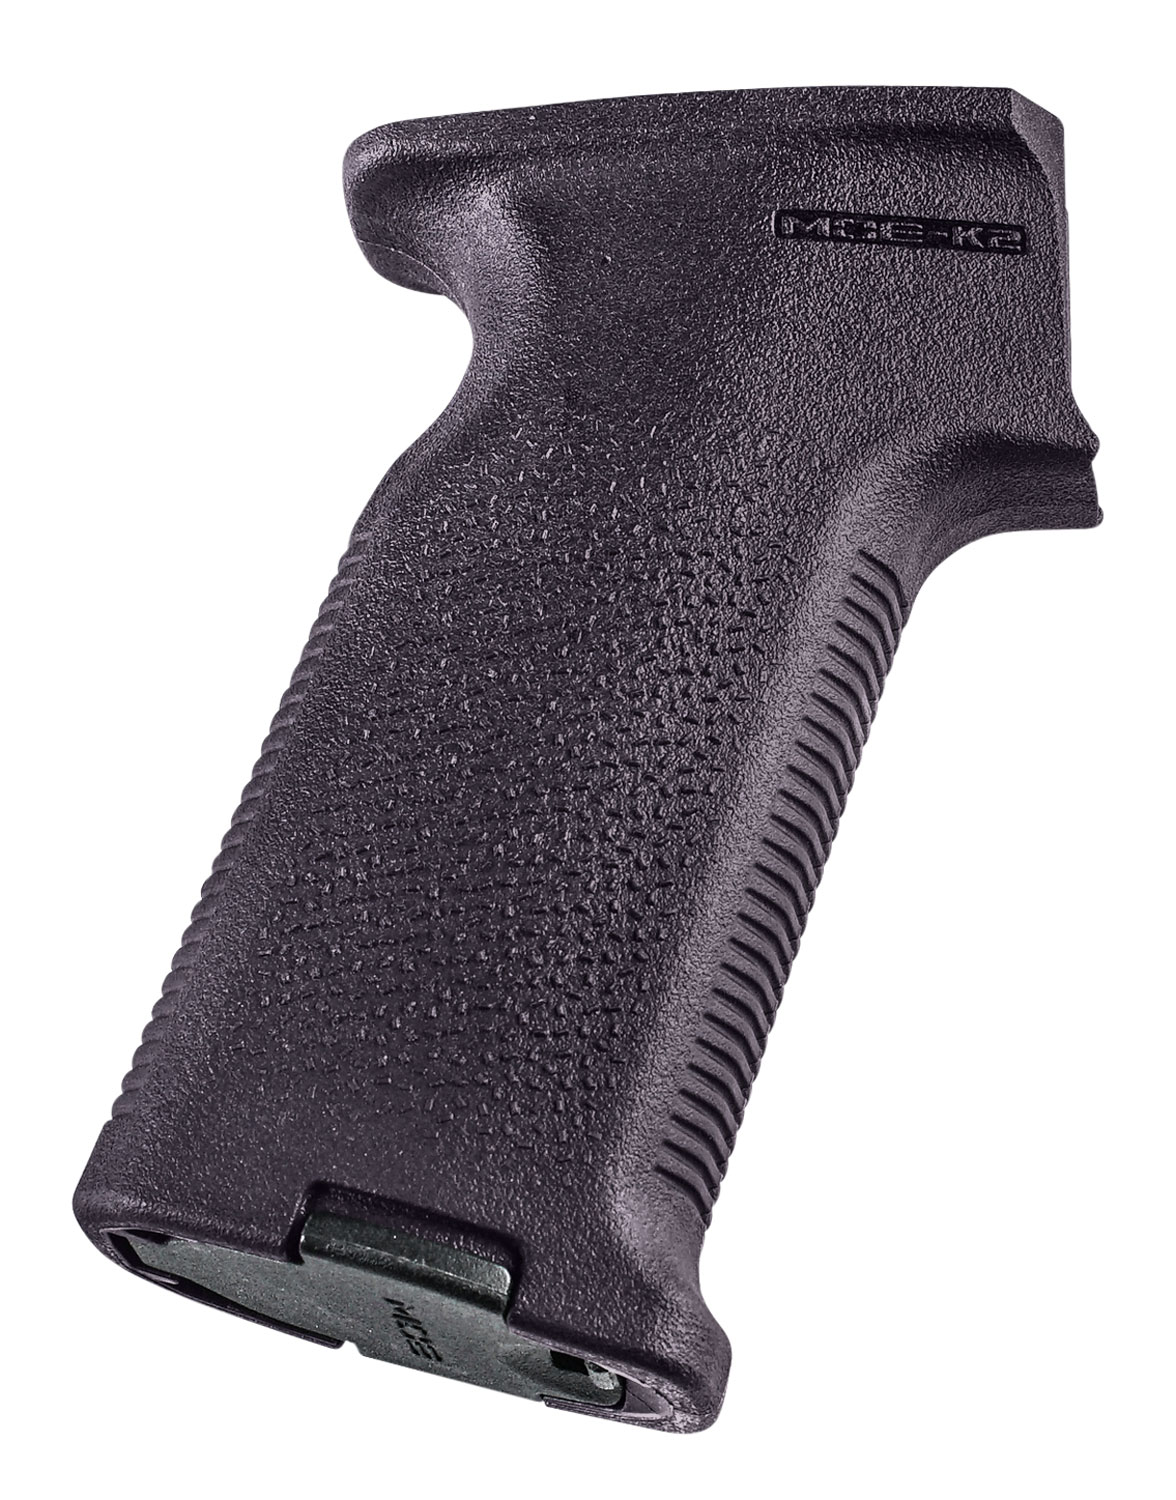 Magpul MAG683-PLM MOE-K2 Grip Aggressive Textured Plum Polymer for AK-47, AK-74